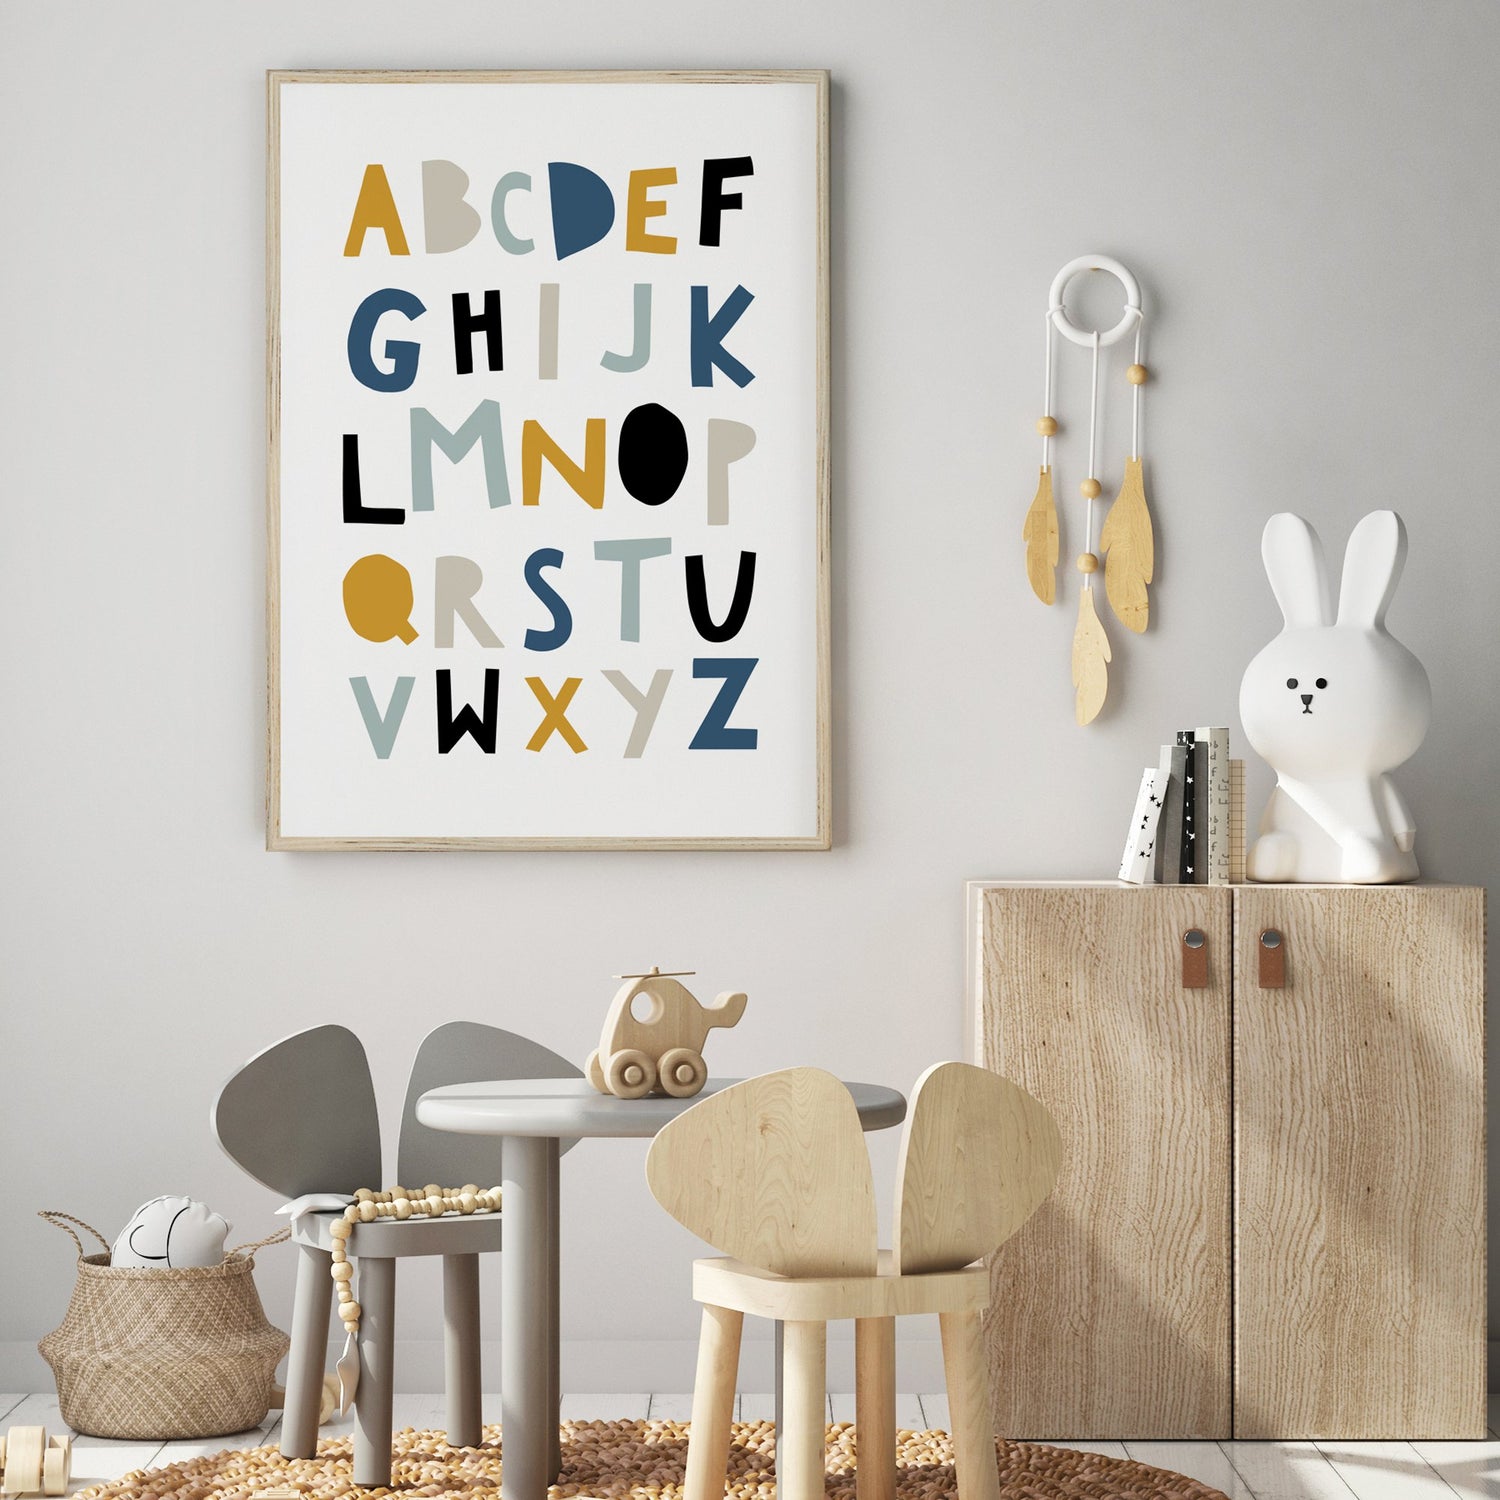 Colourful Alphabet Print